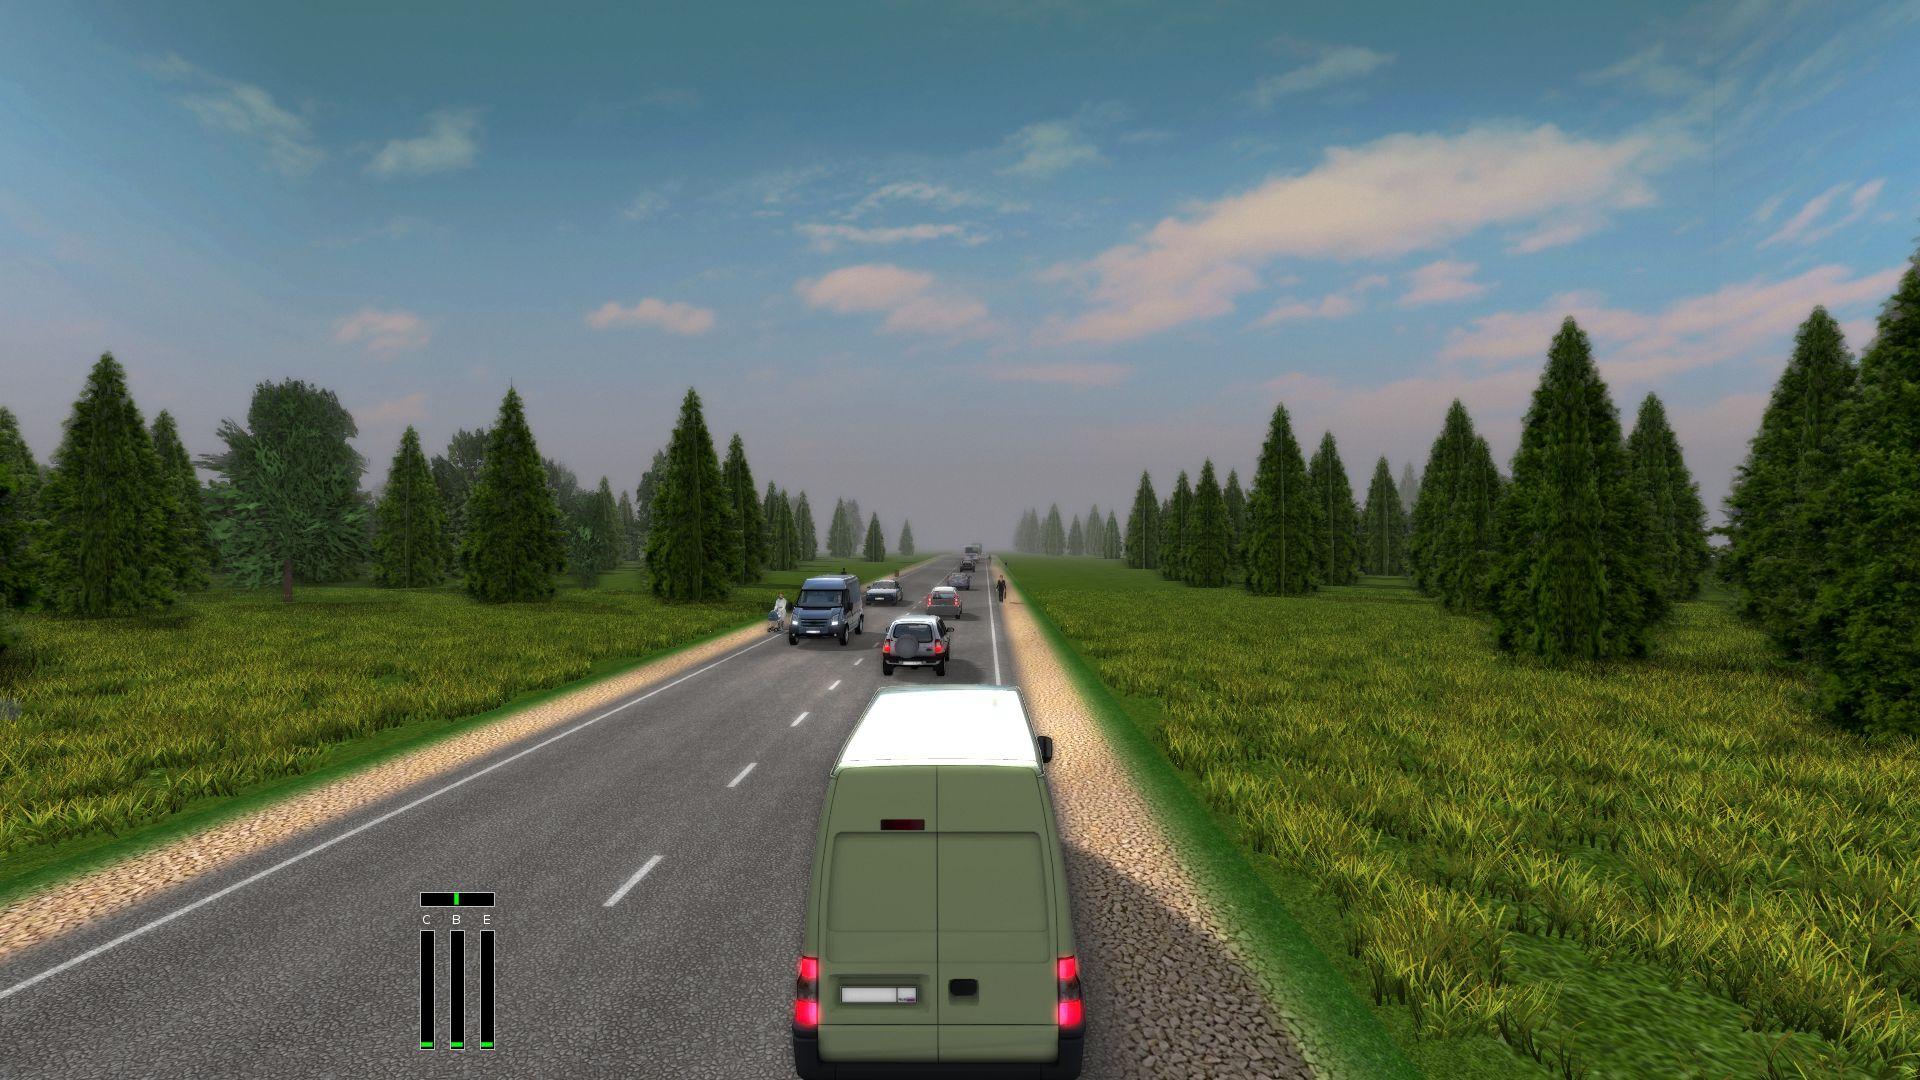 Screenshot №10 from game Drive Megapolis